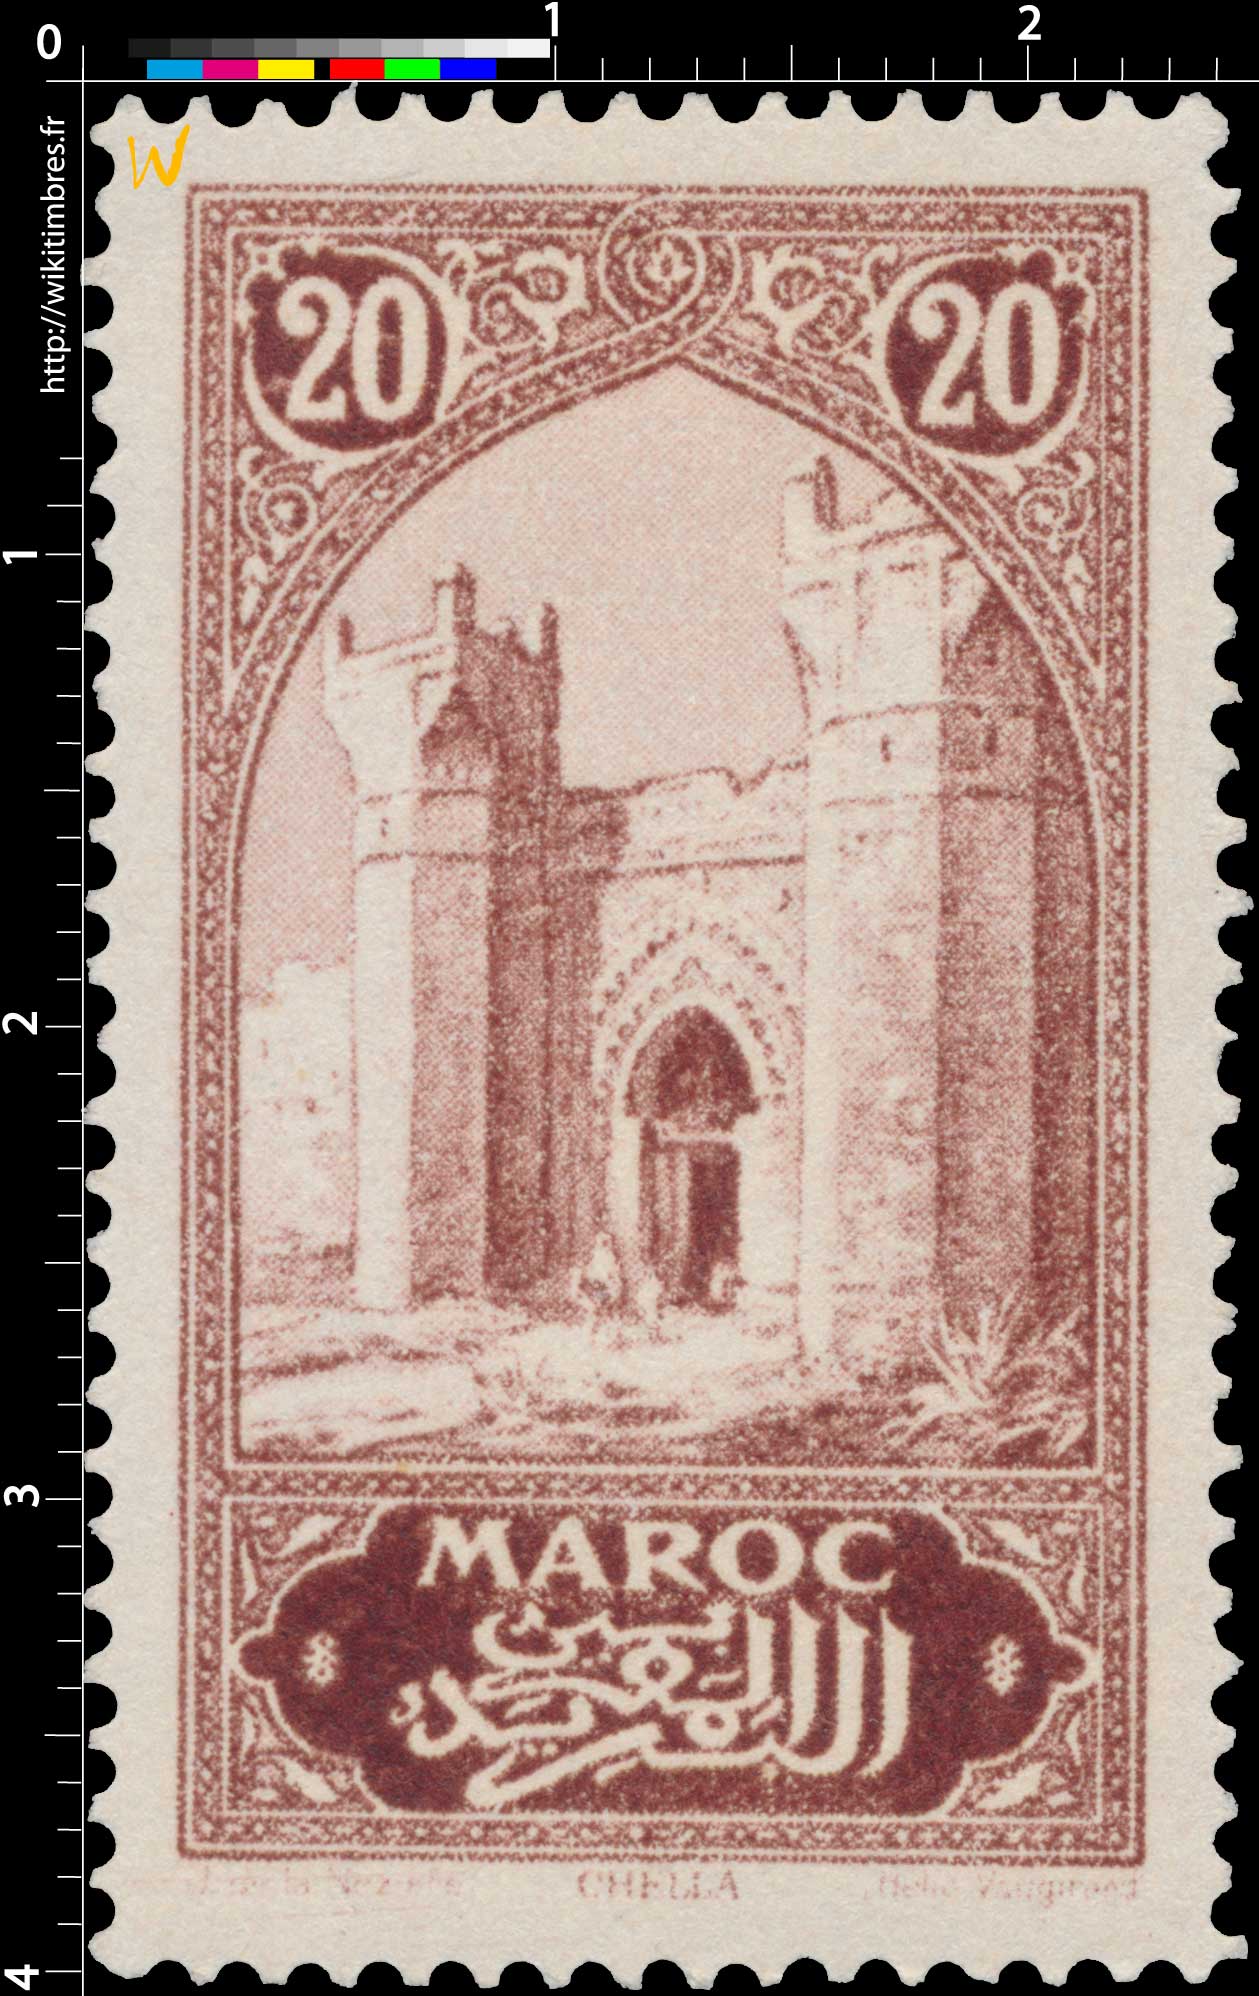 1917 Maroc - Porte de Chella - Rabat